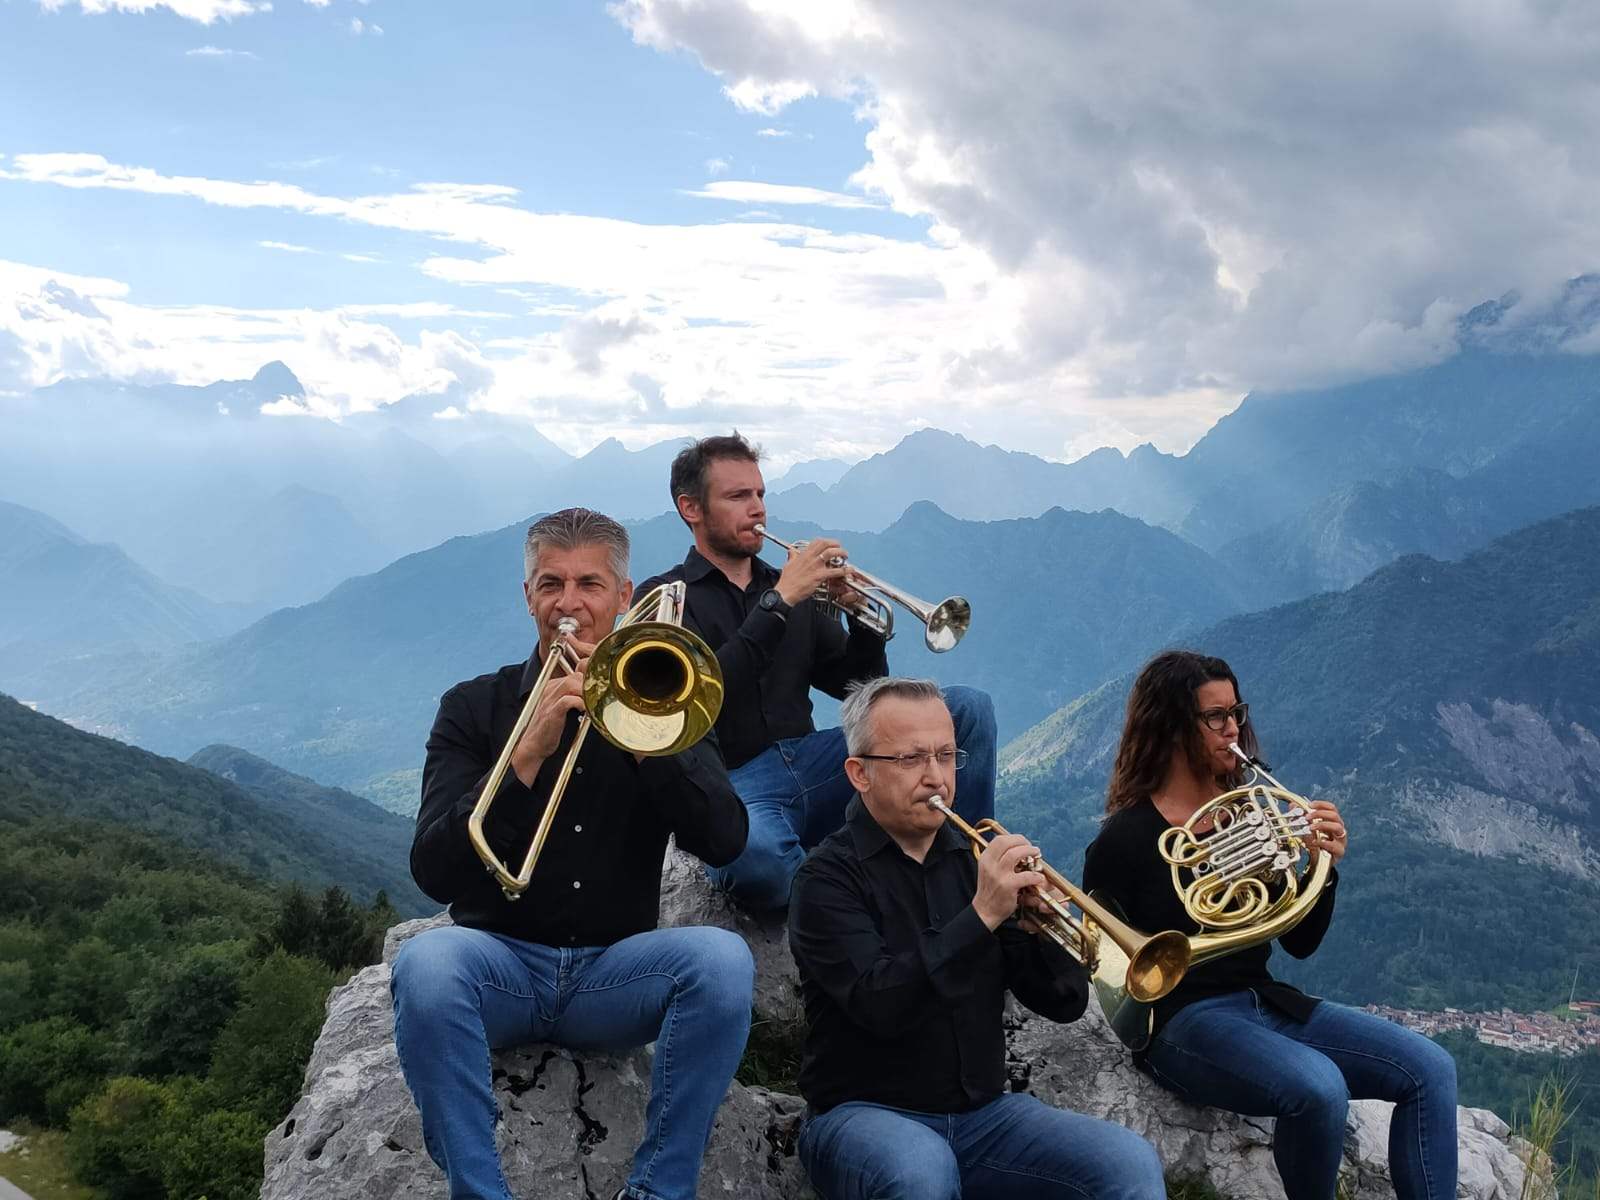 Tiepolo Brass Quintet